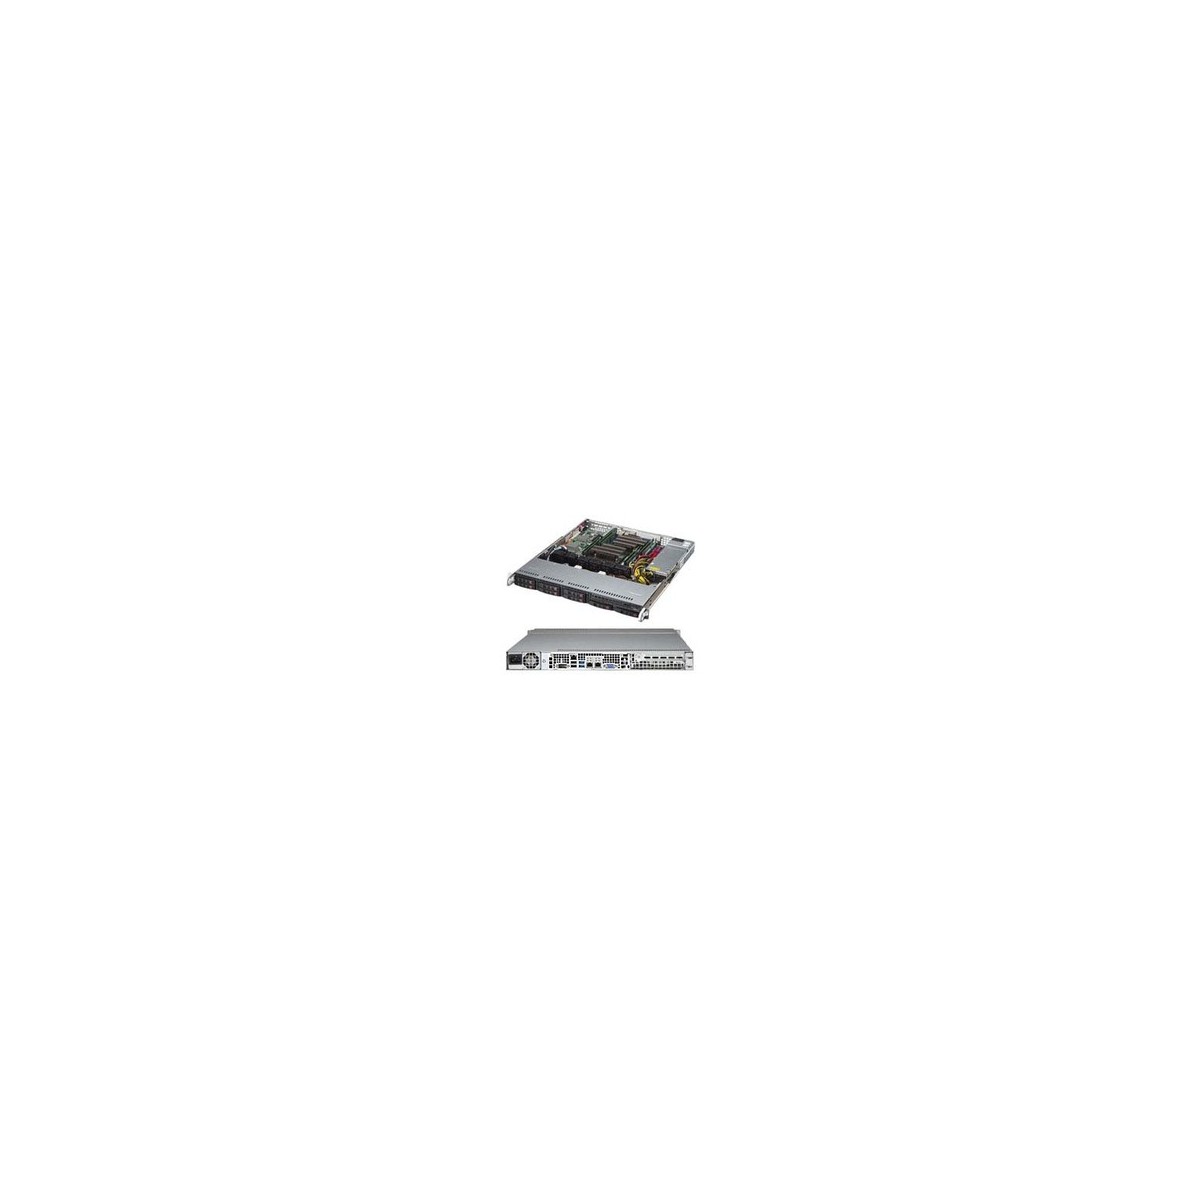 Supermicro CSE-113MFAC2-605CB - Rack - Server - Black - ATX - 1U - HDD - LAN - Power